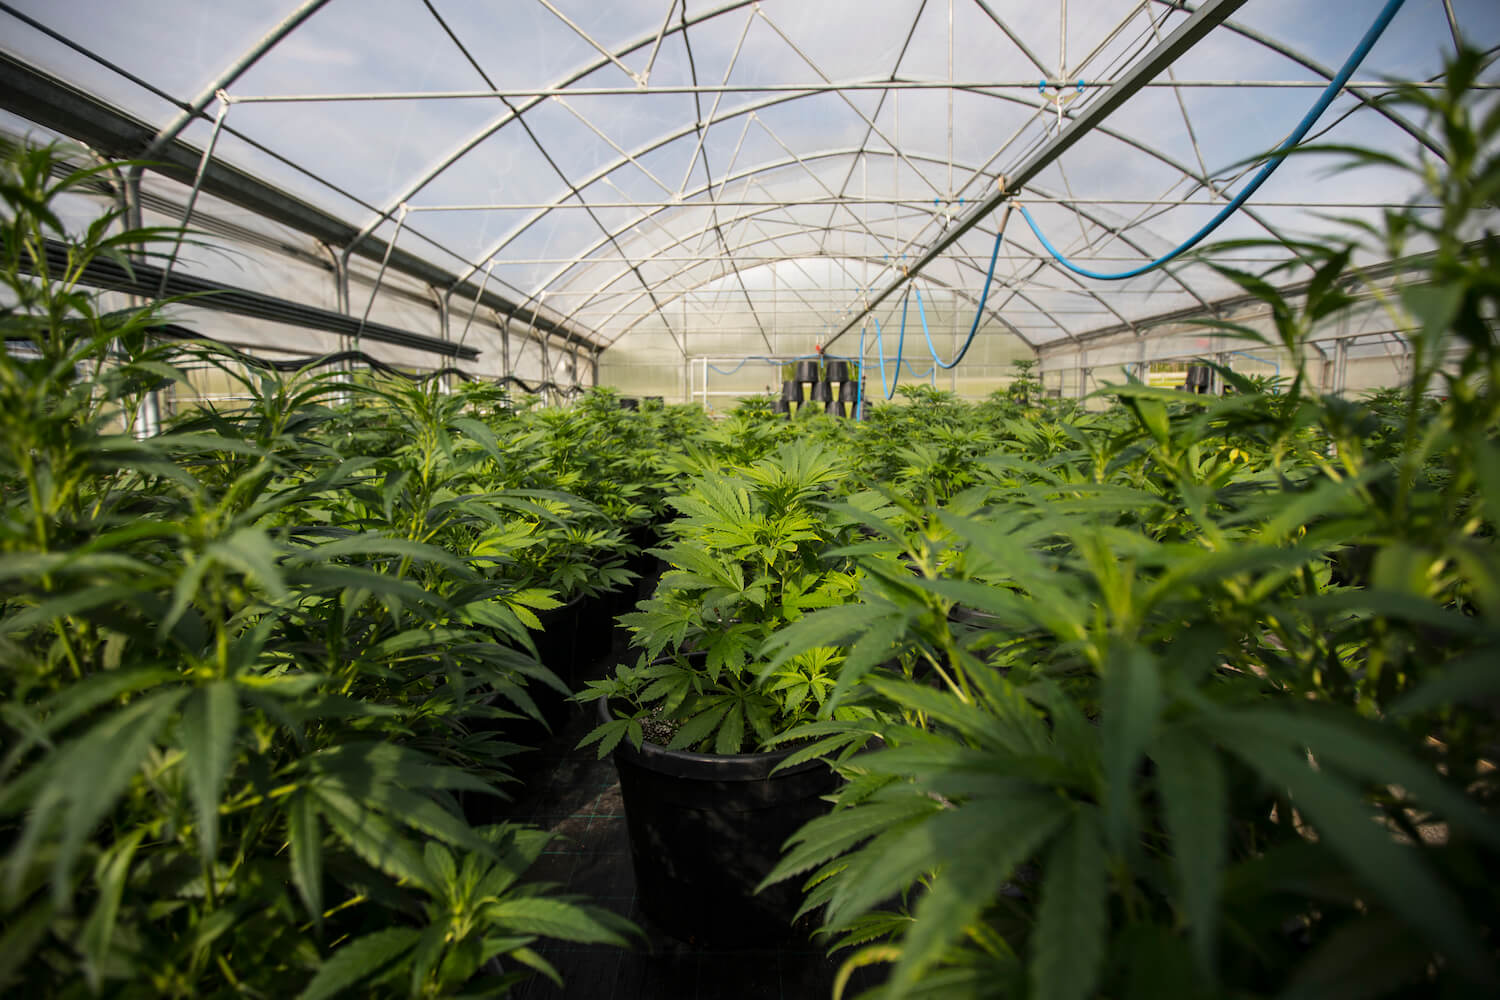 Marijuana grows in greenhouse in black pots. February 2022